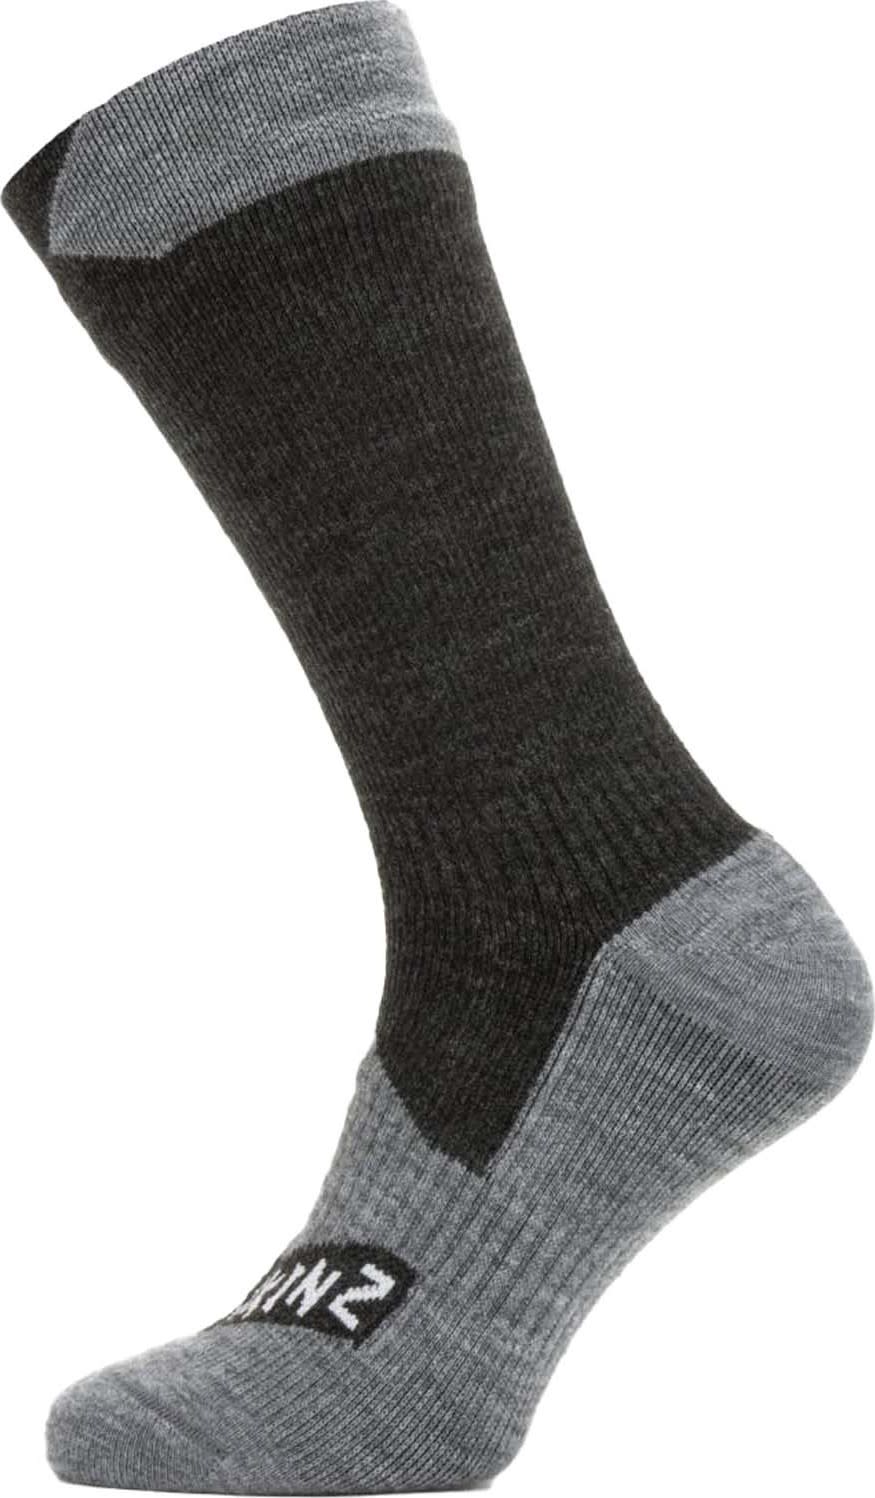 Raynham Waterproof All Weather Mid Length Sock Black/Dark Grey Marl